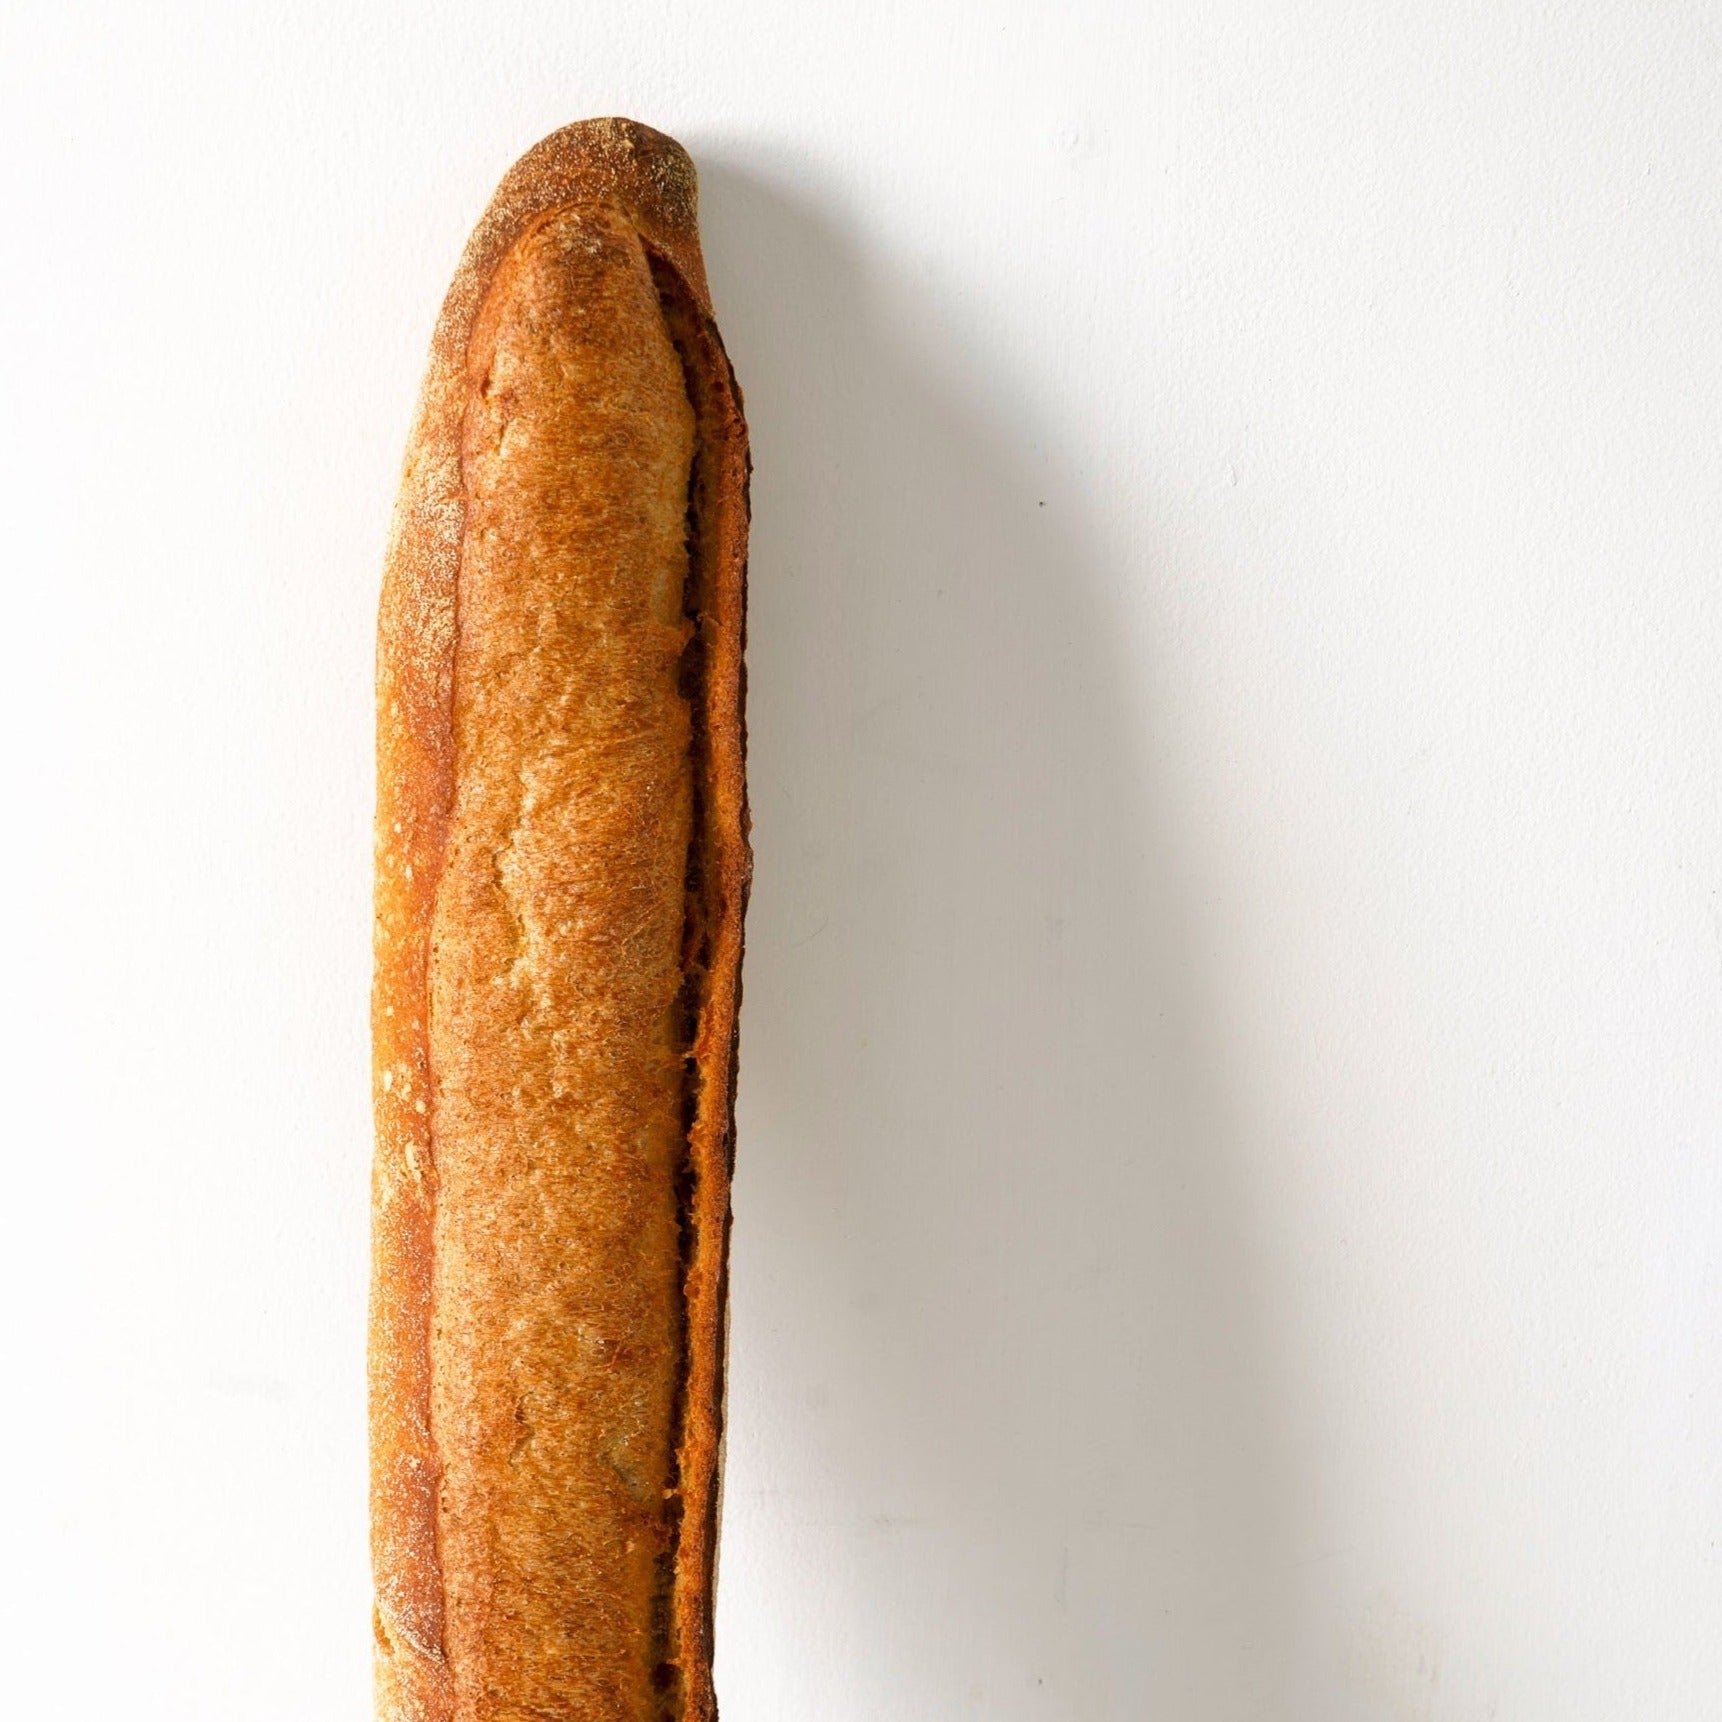 Image of half a baguette bread stick